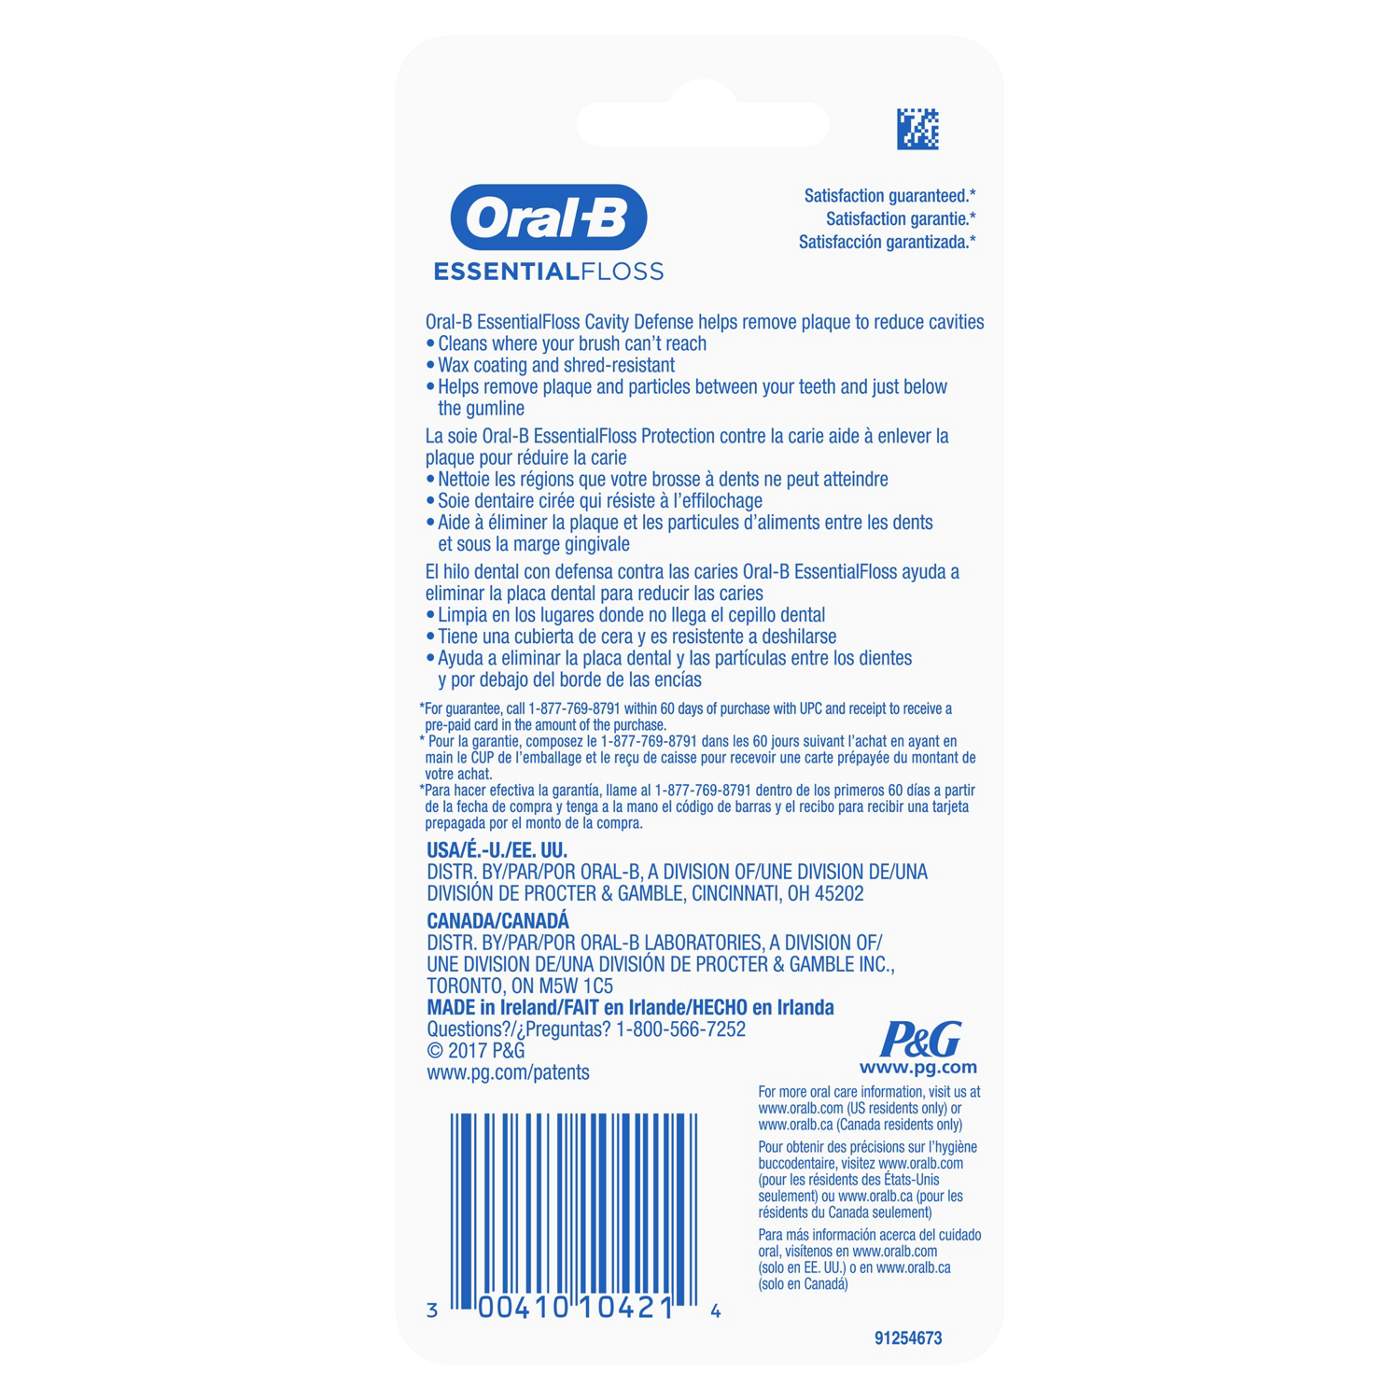 Oral-B EssentialFloss Cavity Defense Dental Floss - Mint; image 2 of 3